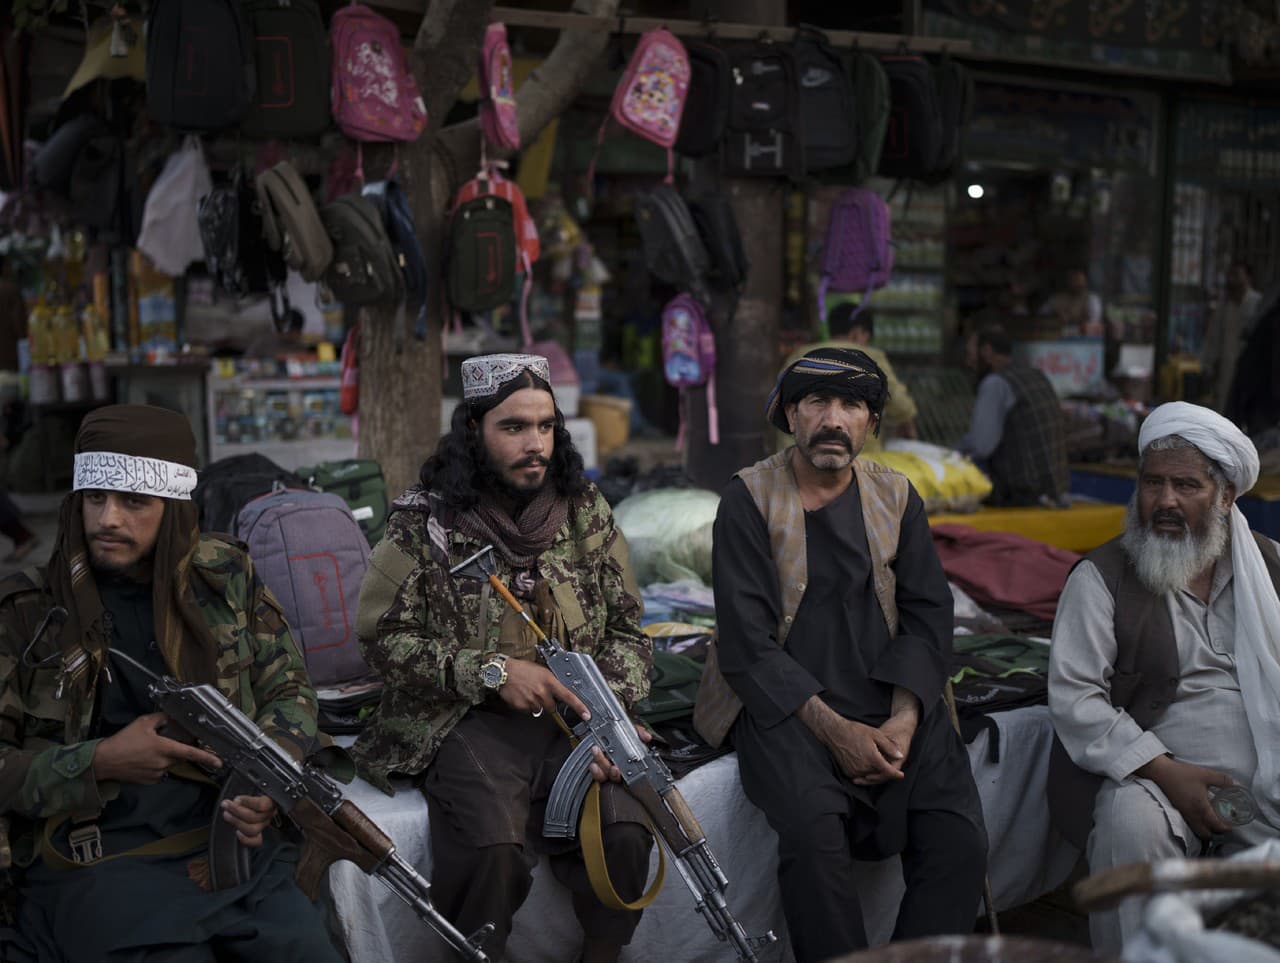 Ľudí z Afganistanu evakuovali po prevzatí moci Talibanom